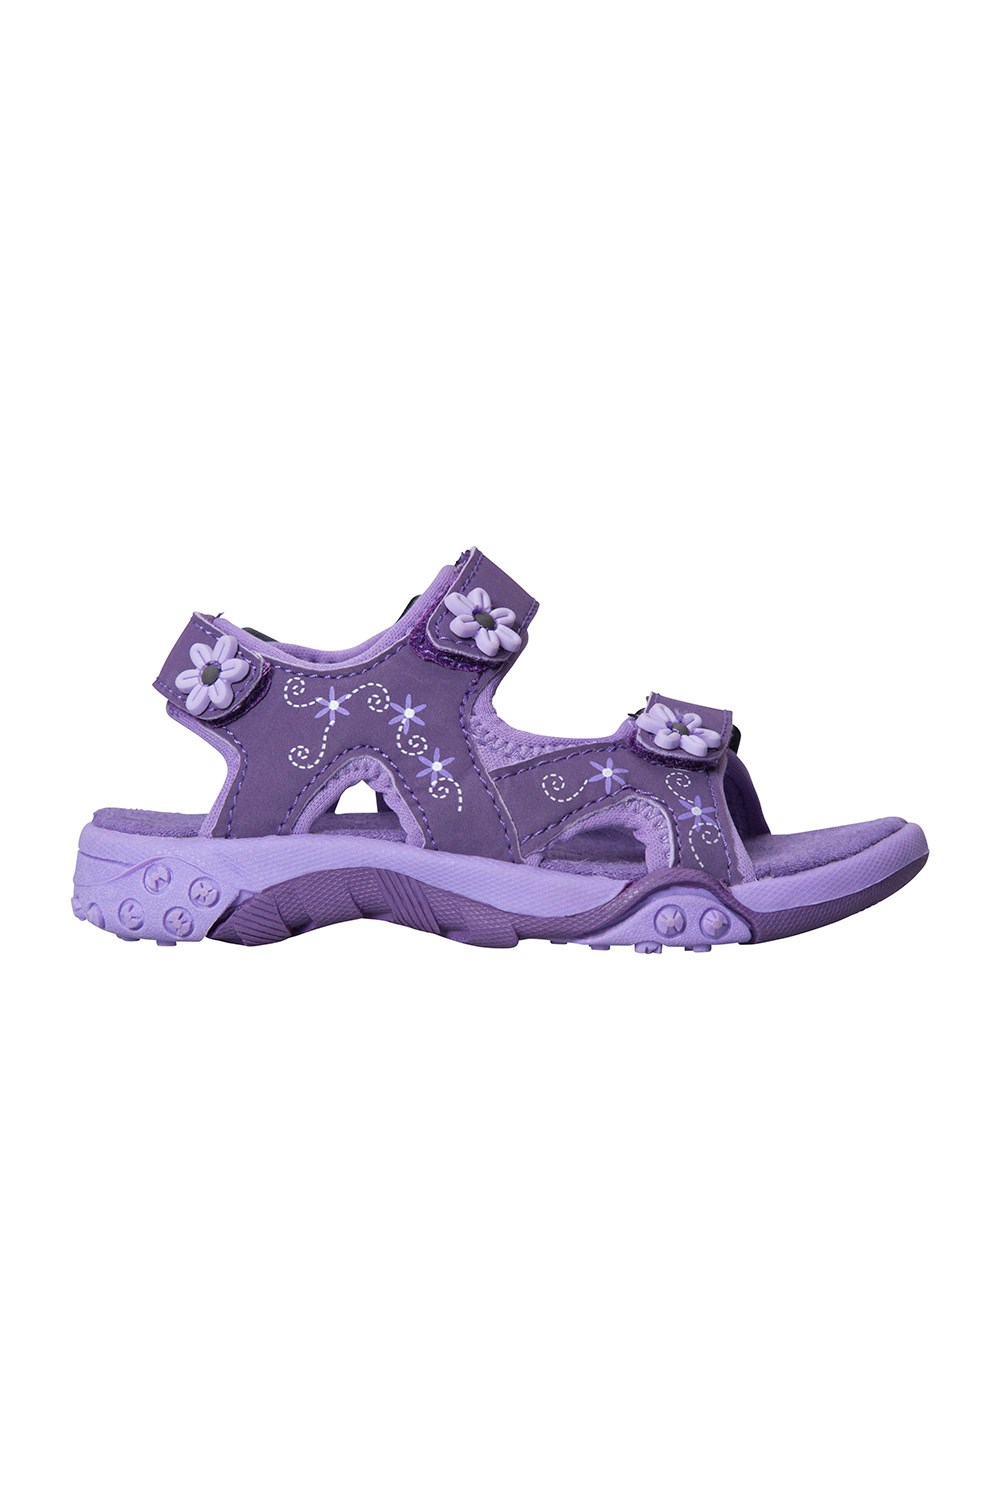 Mountain Warehouse Seaside Junior Sandals Flexible Kids Summer Shoes 